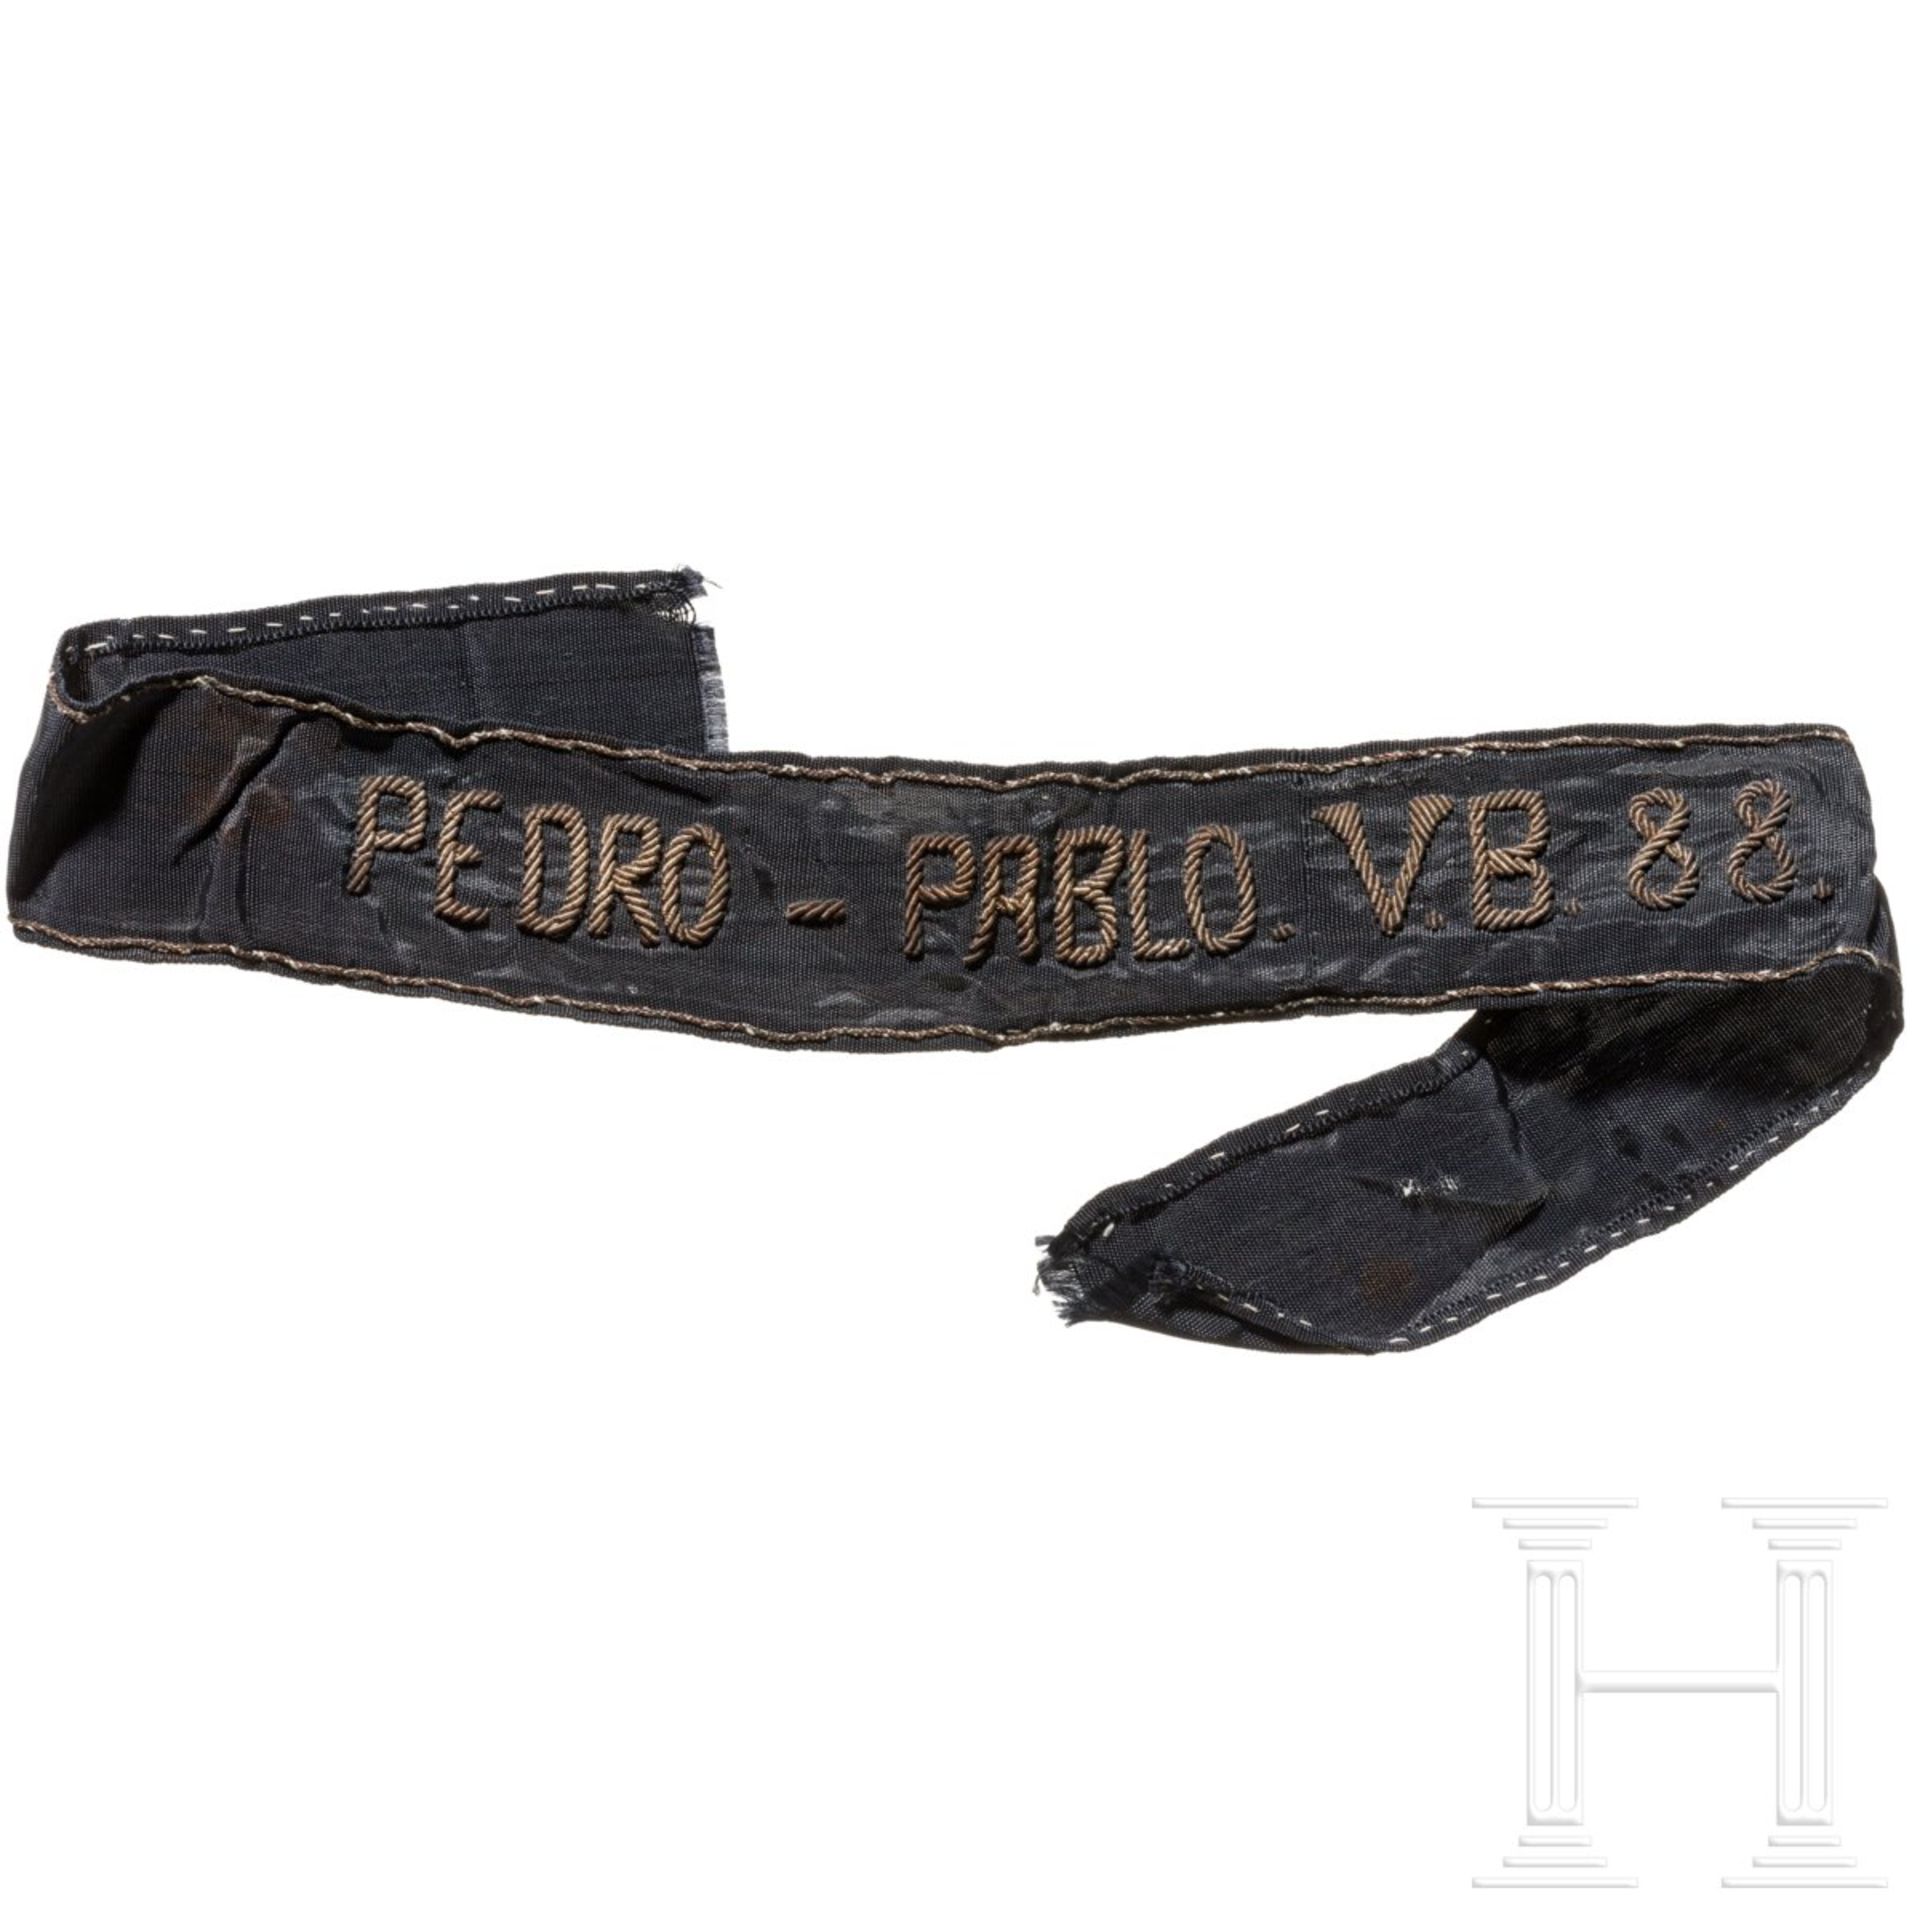 Ärmelband "Pedro - Pablo. V.B.88." des Flugzeugbeobachters Karl Wilke der "Legion Condor"